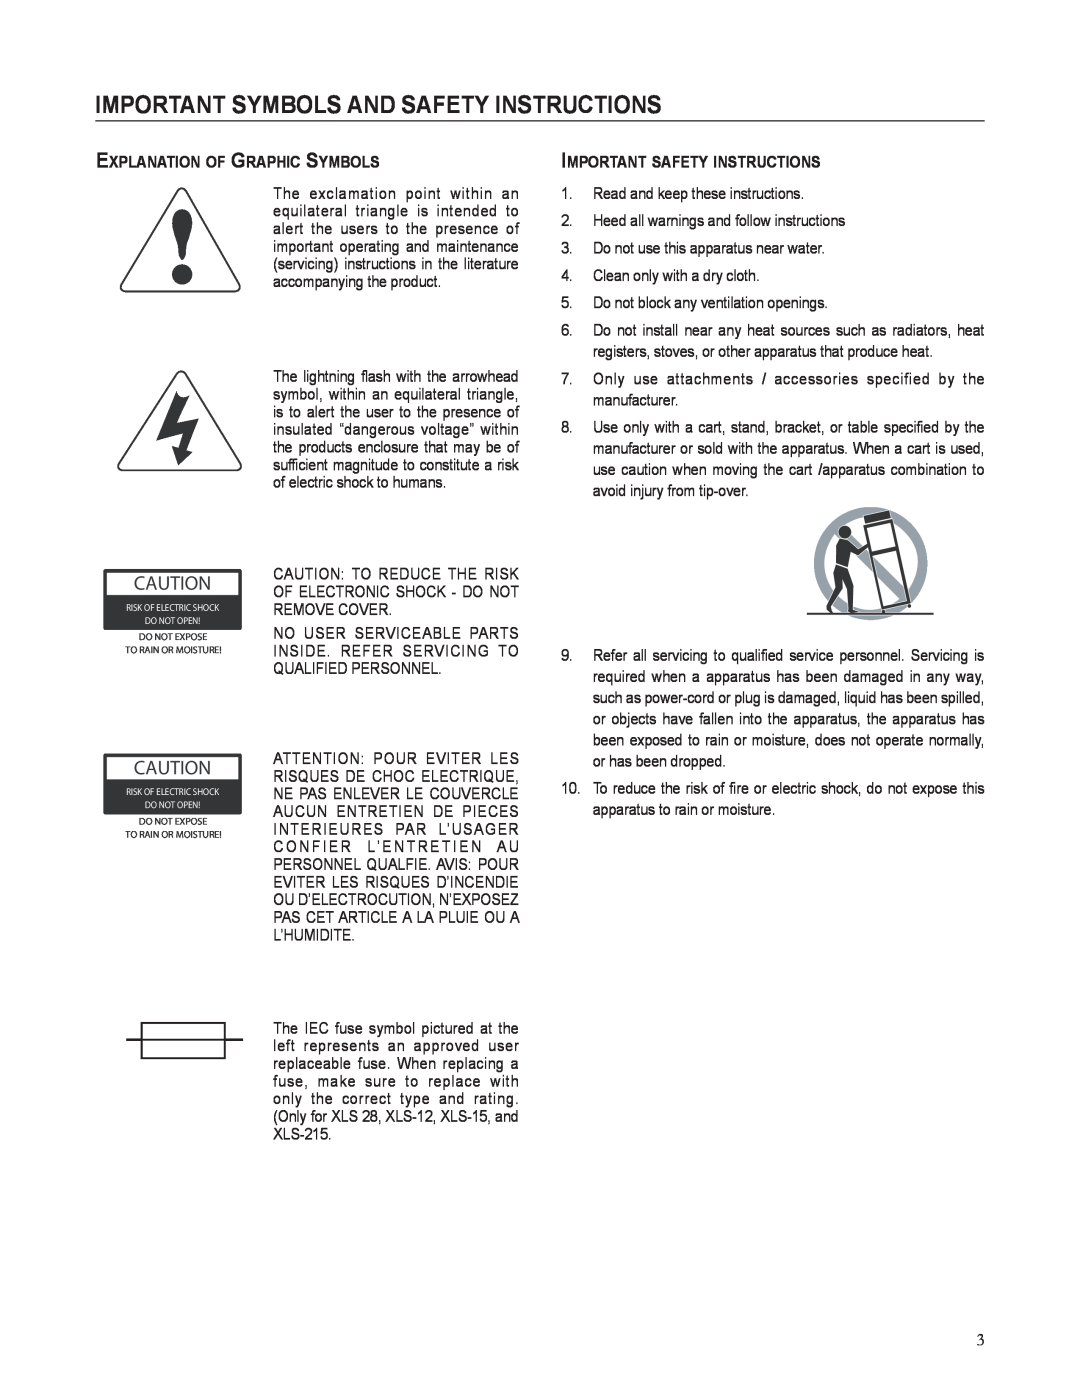 Cerwin-Vega XLS important symbols and safety instructions, Explanation of Graphic Symbols, Important safety instructions 